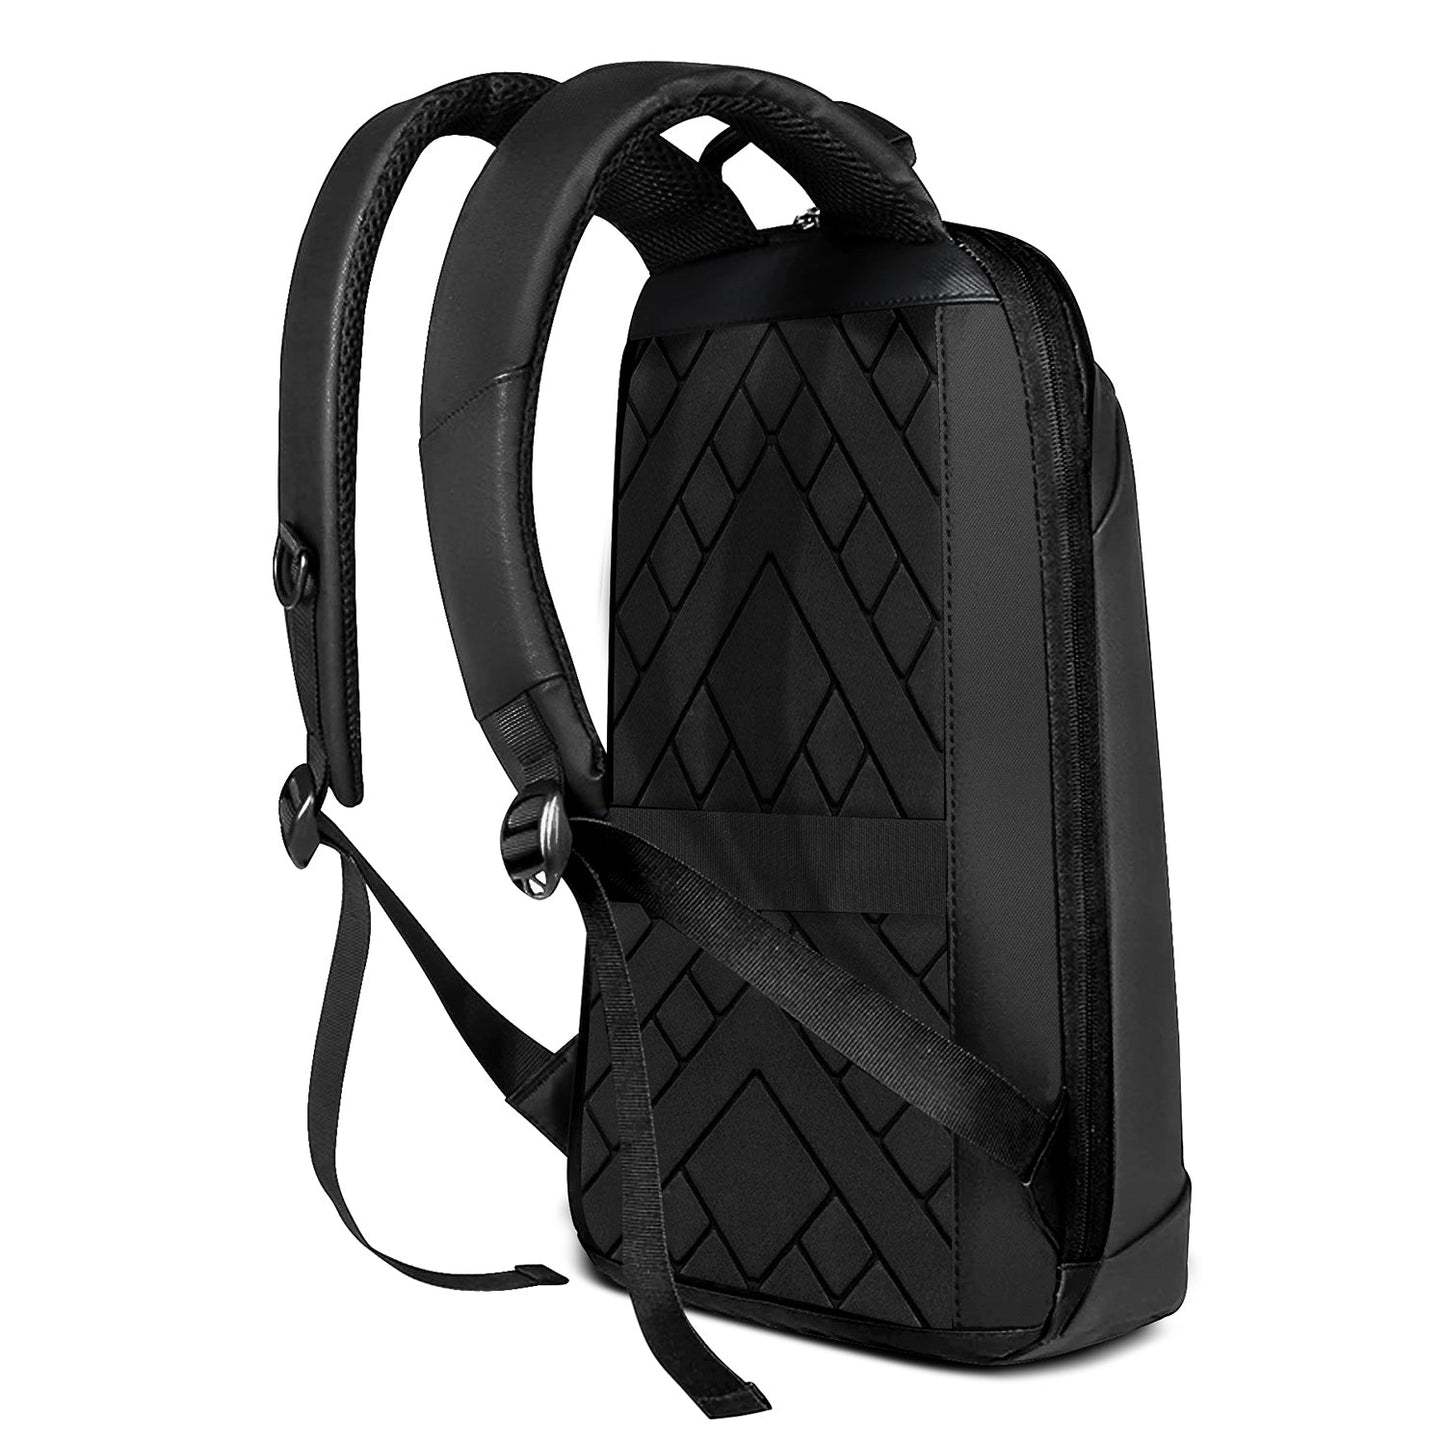 Gripp Trek Backpack Upto 15.6" For Laptop/macbook - Black